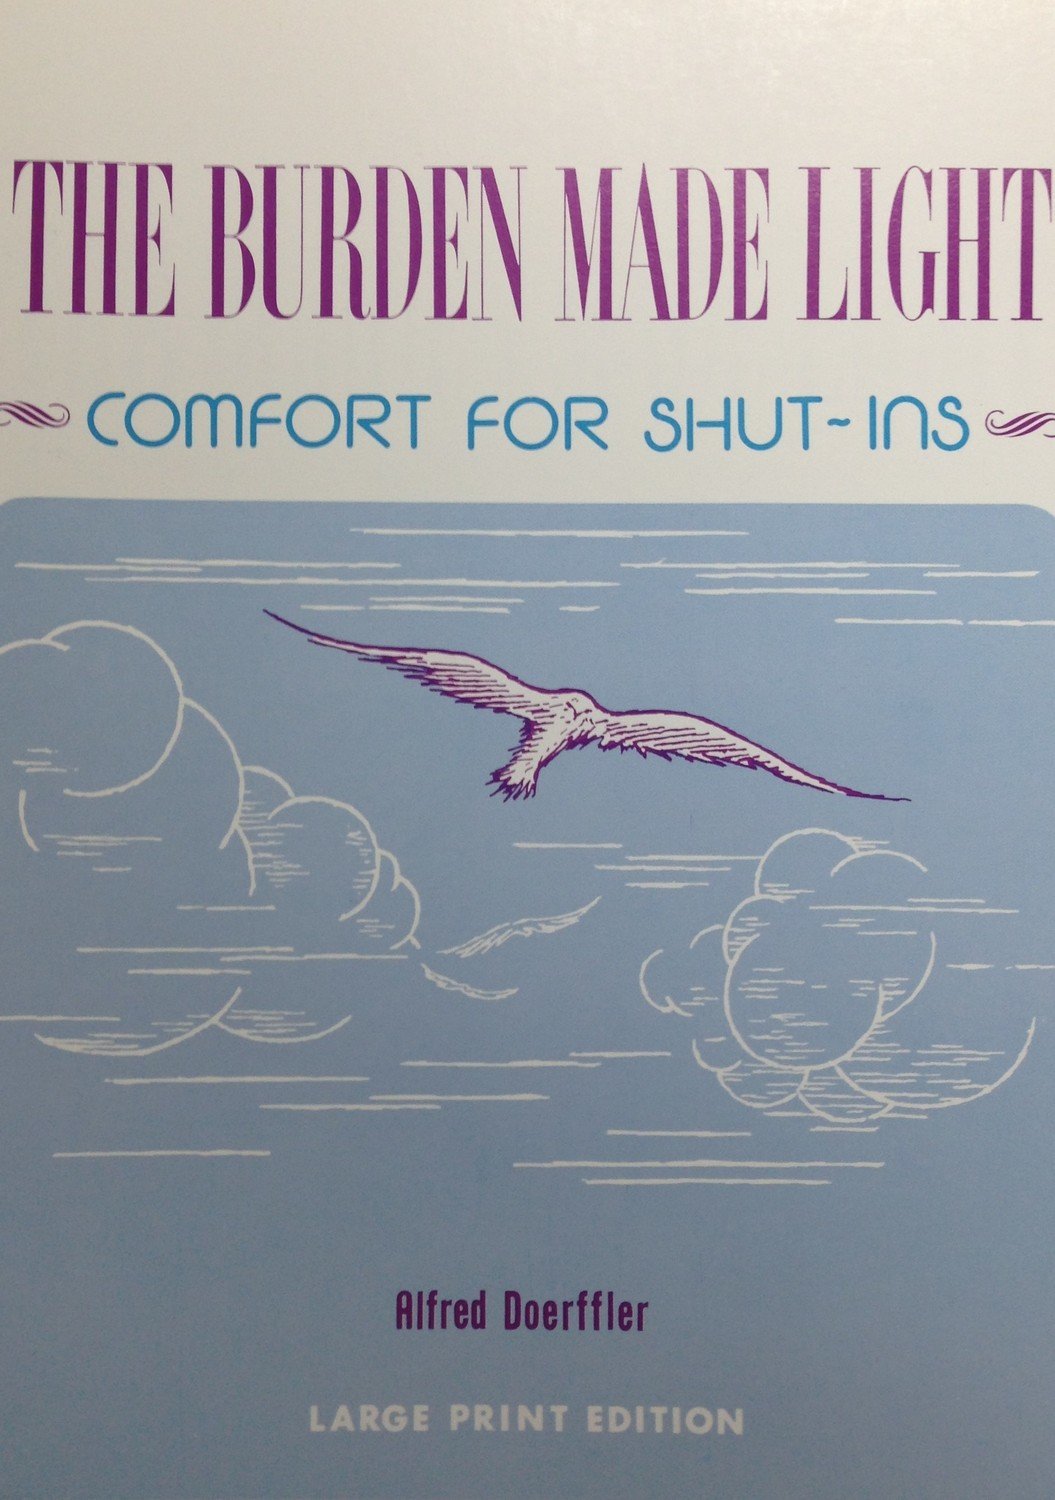 The Burden Made Light:  Comfort for Shut-Ins by Alfred Doerffler  (LARGE PRINT EDITION)